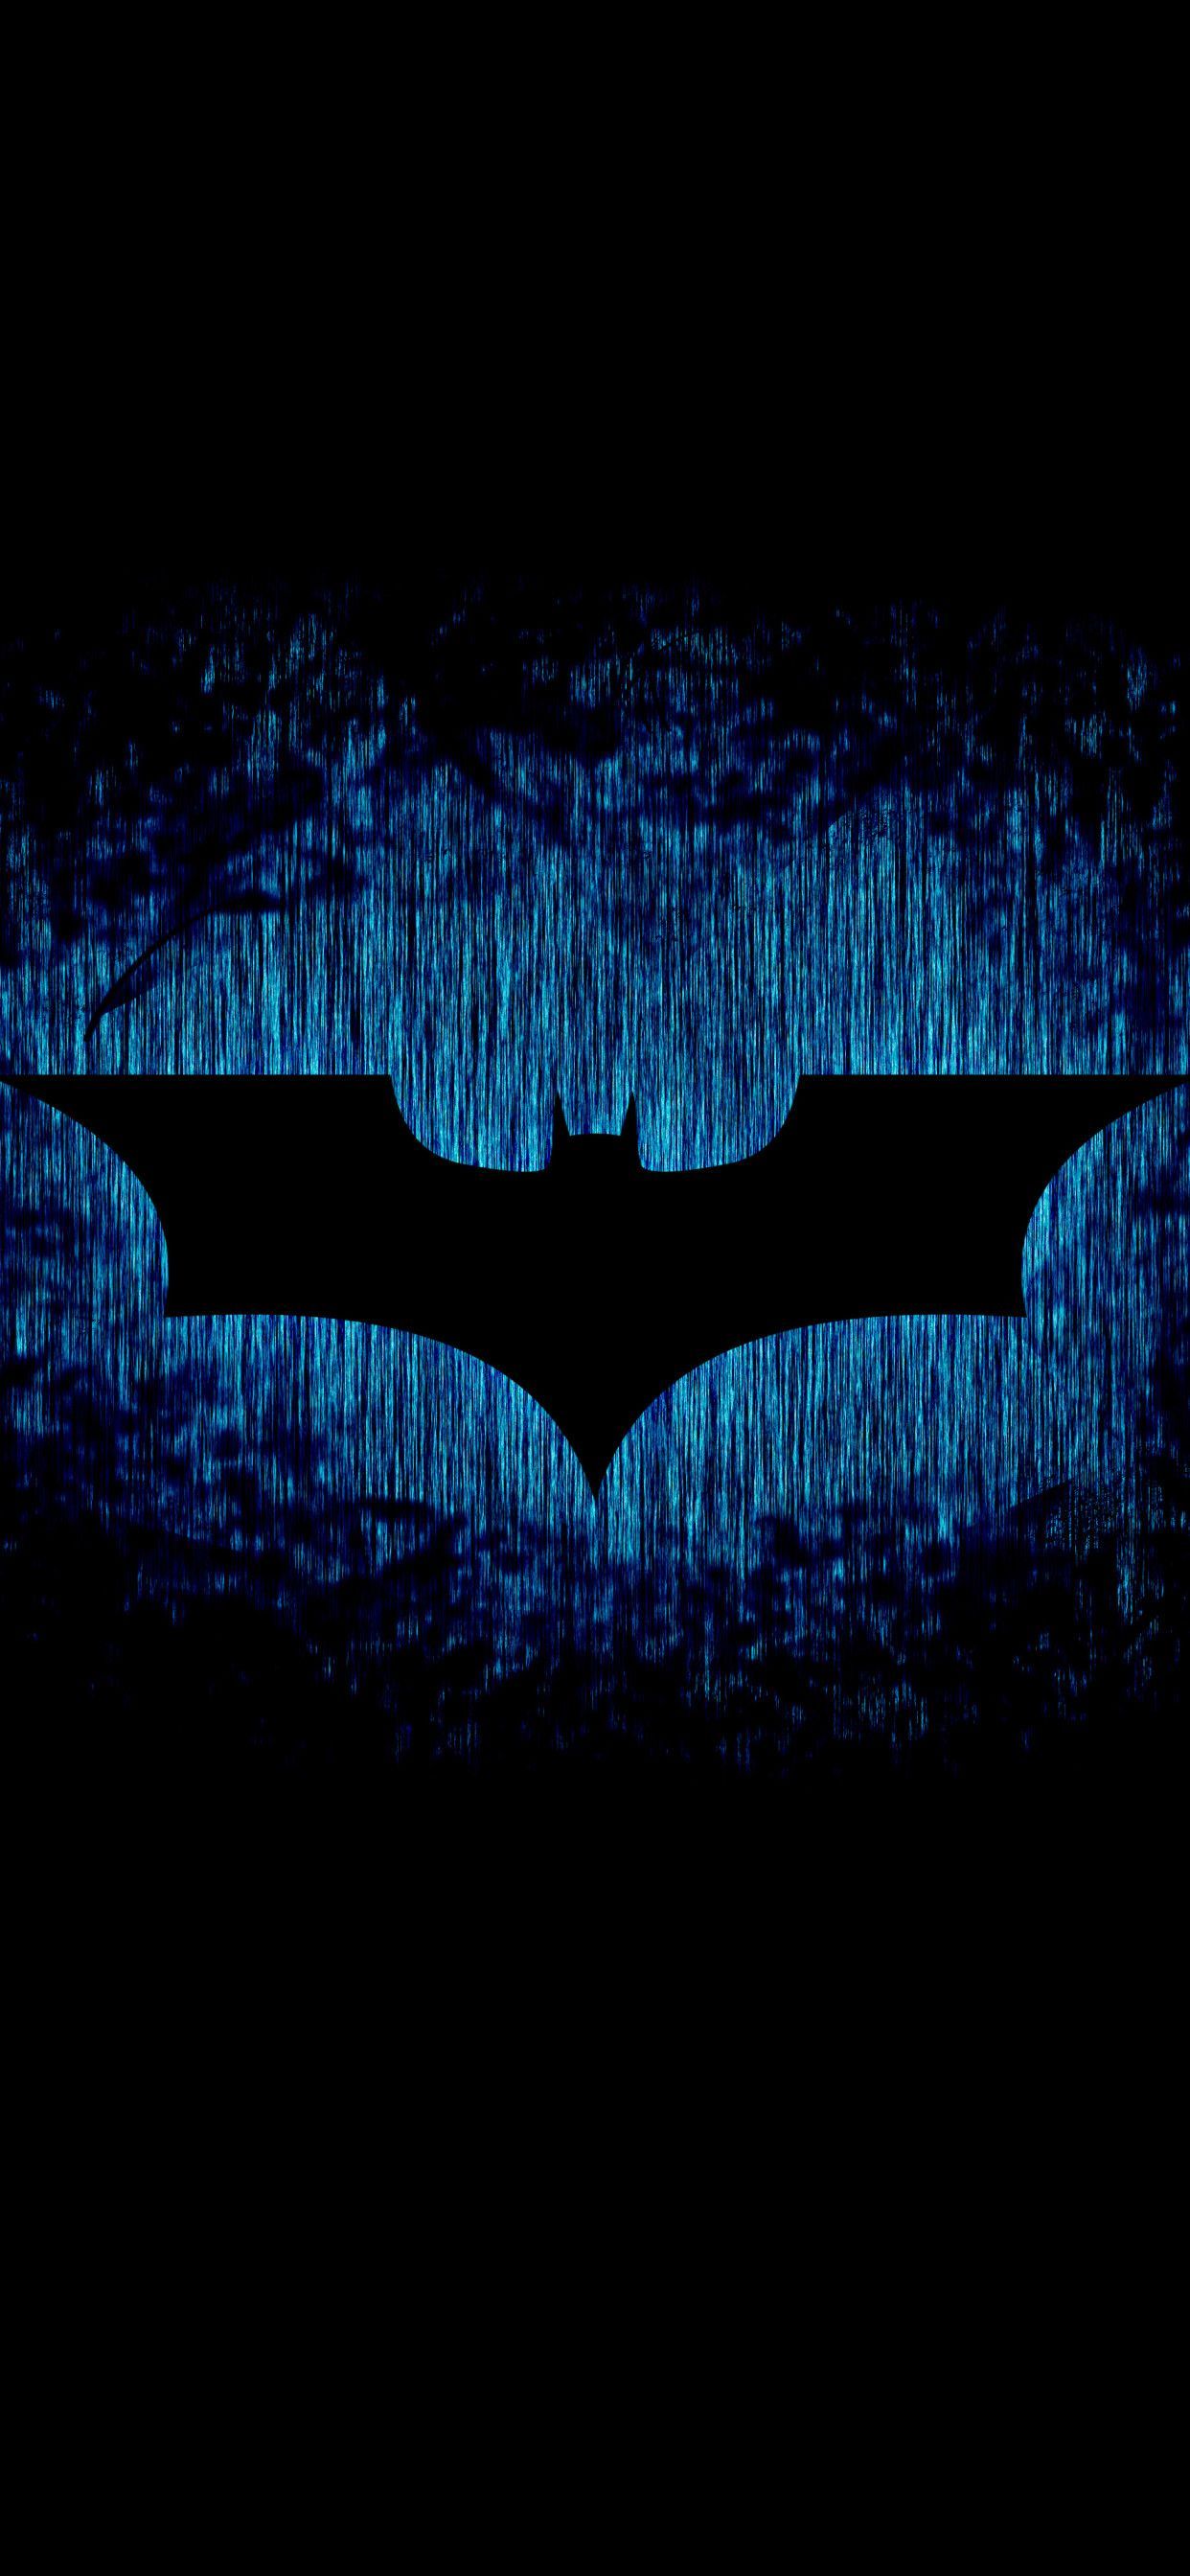 Dark Knight iPhone Wallpaper Free Dark Knight iPhone Background